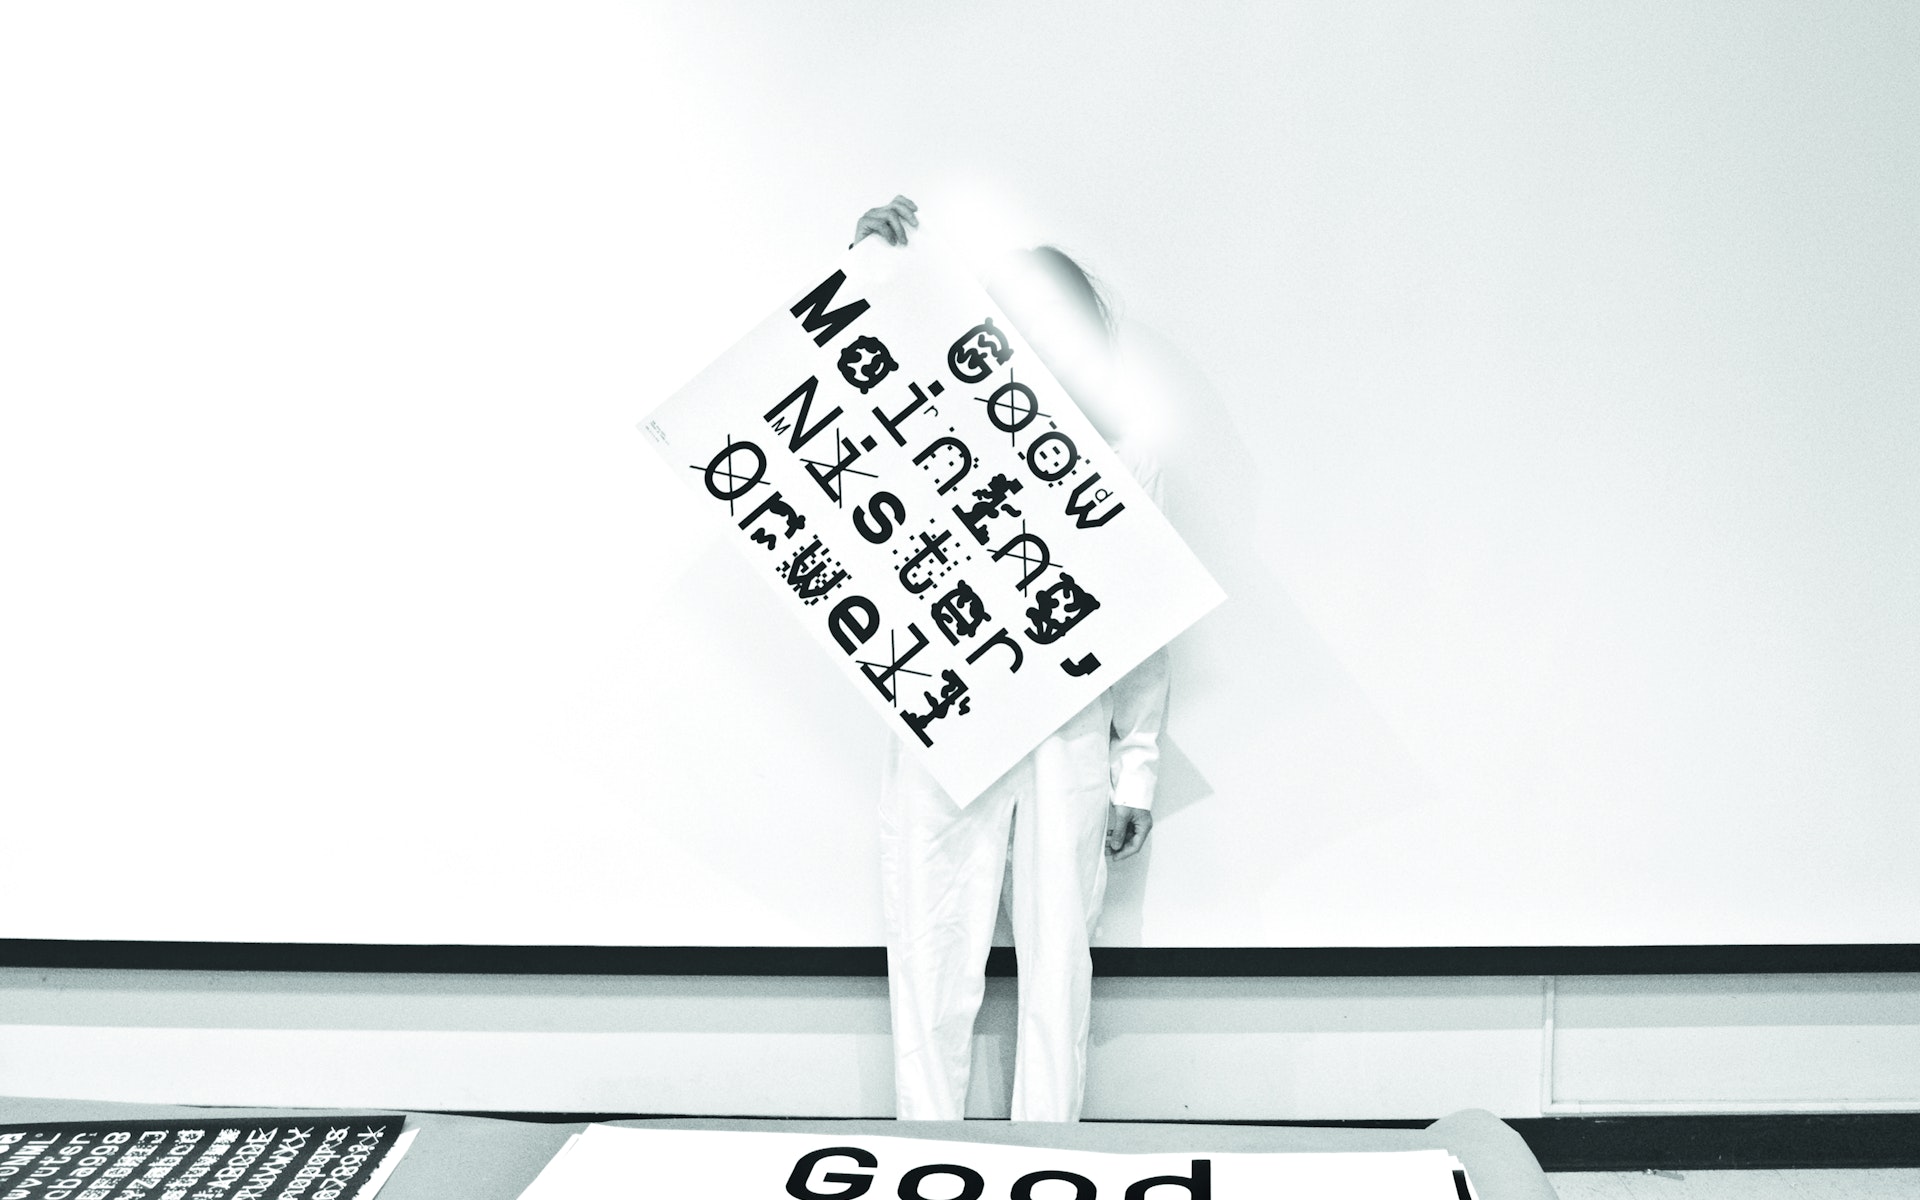 Designer Sang Mun holding a poster displaying his typeface ZXX.